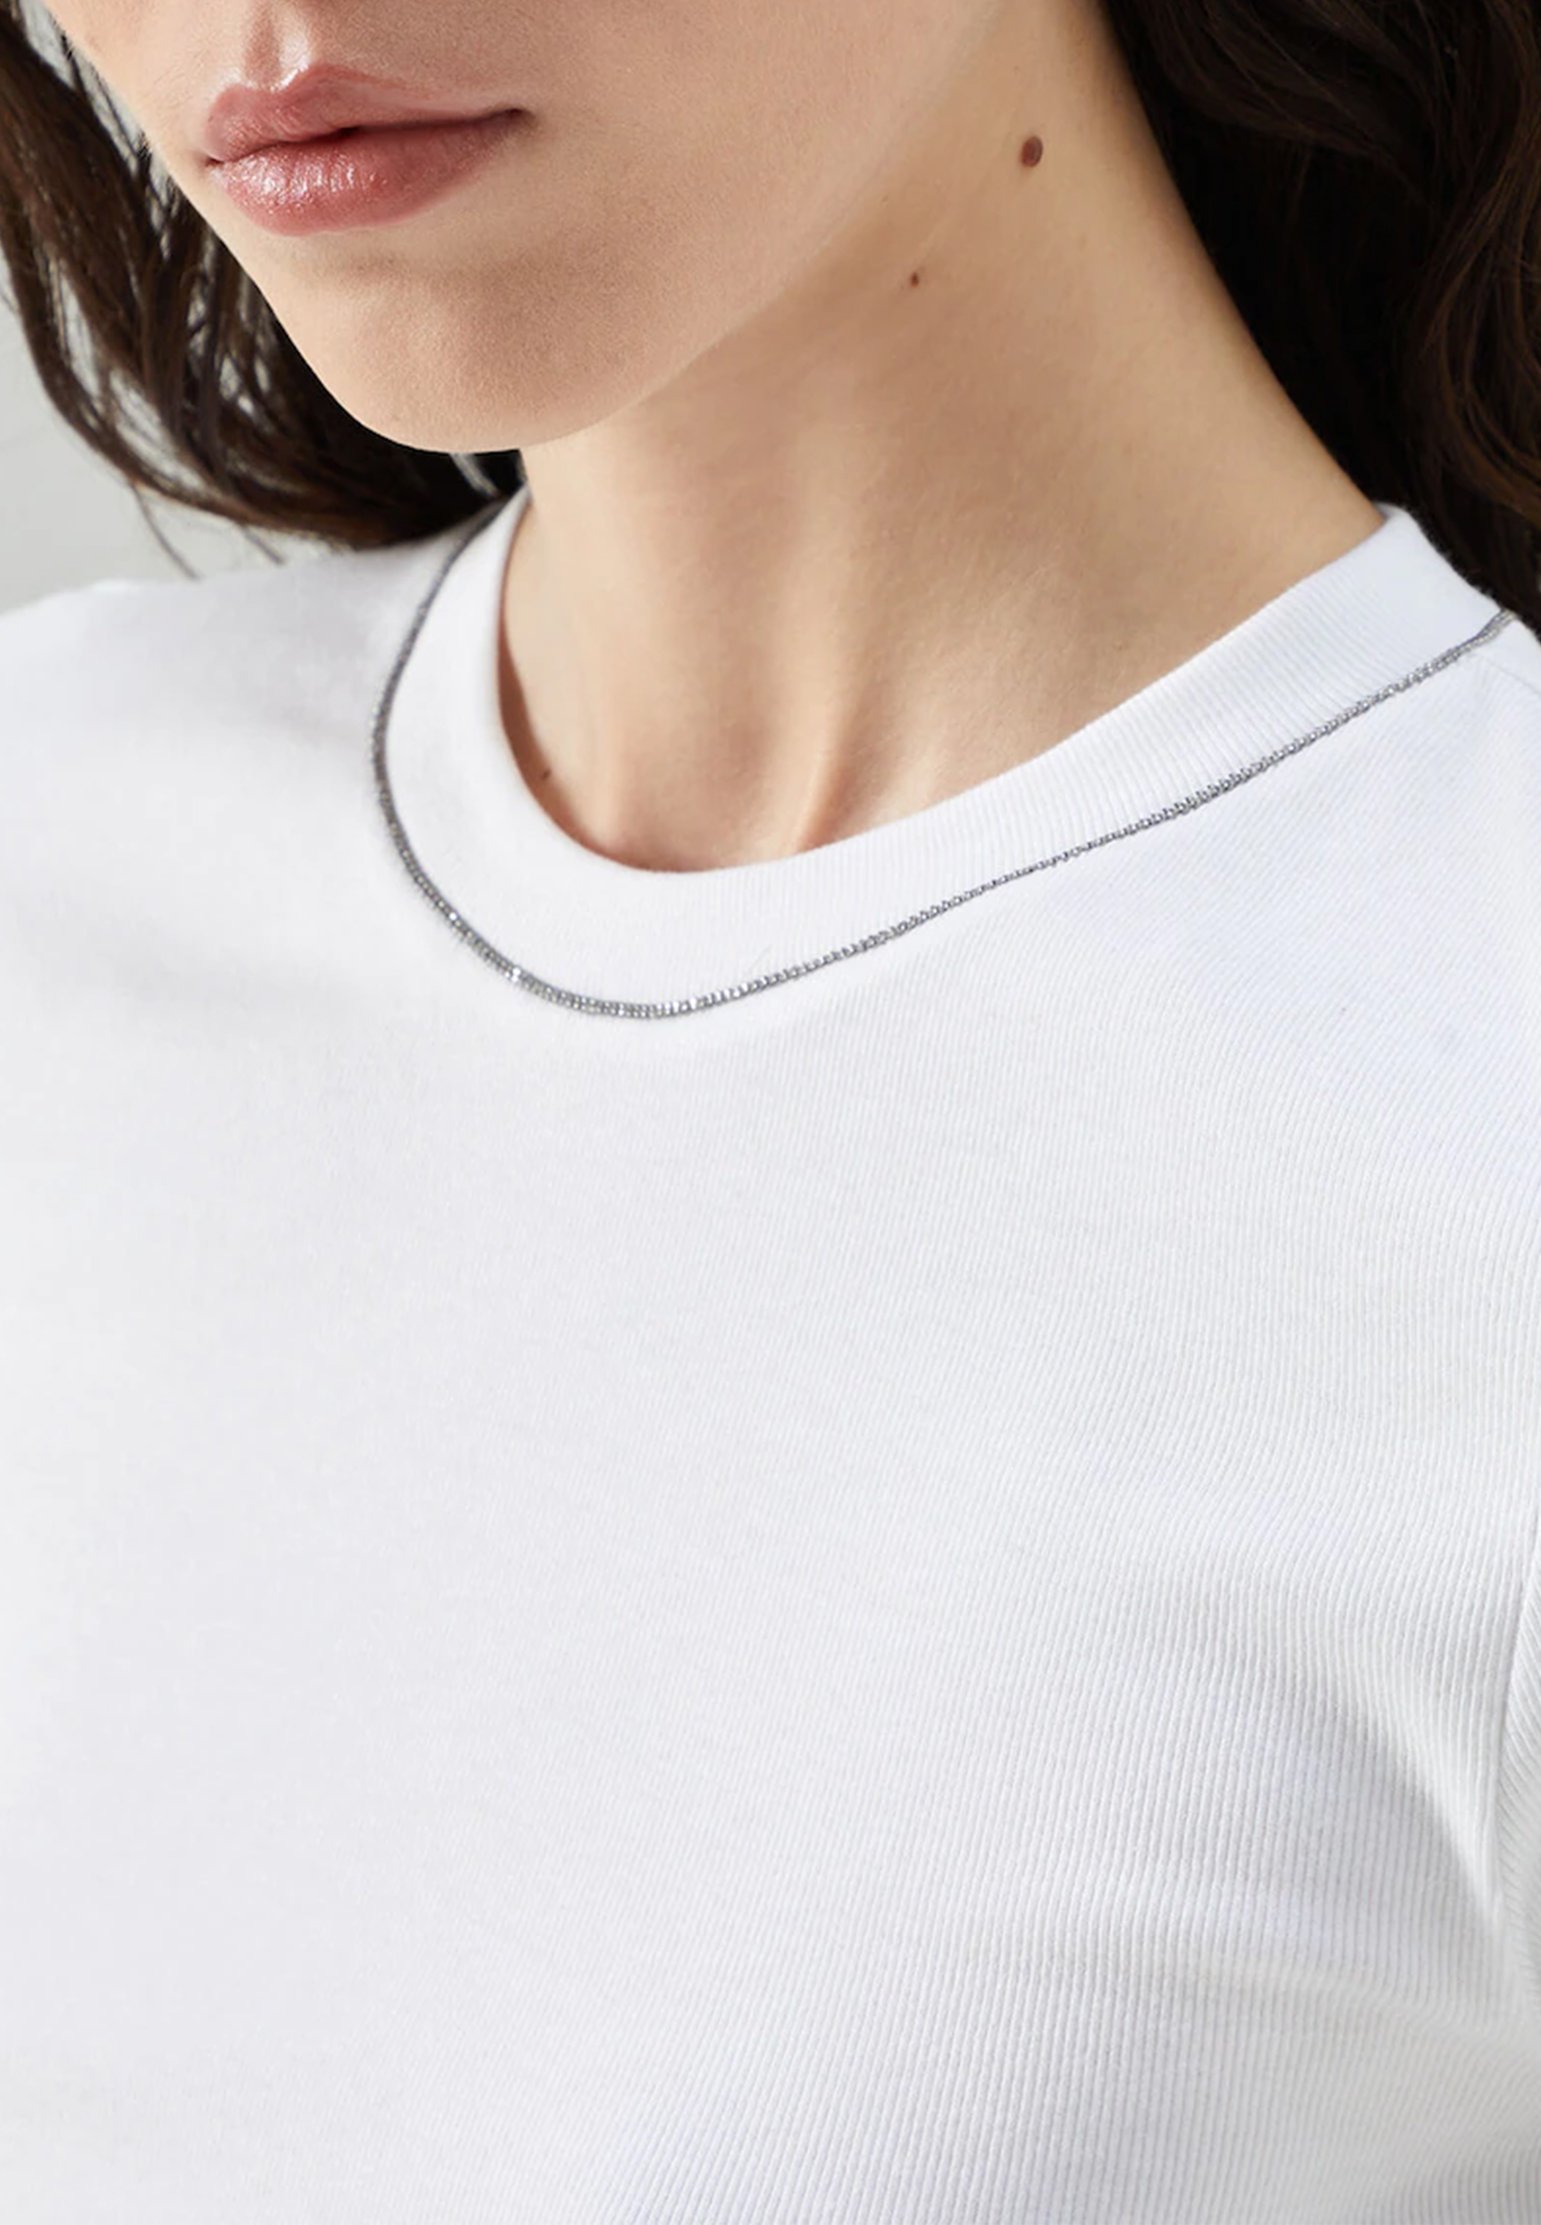 T-Shirt BRUNELLO CUCINELLI Color: white (Code: 632) in online store Allure